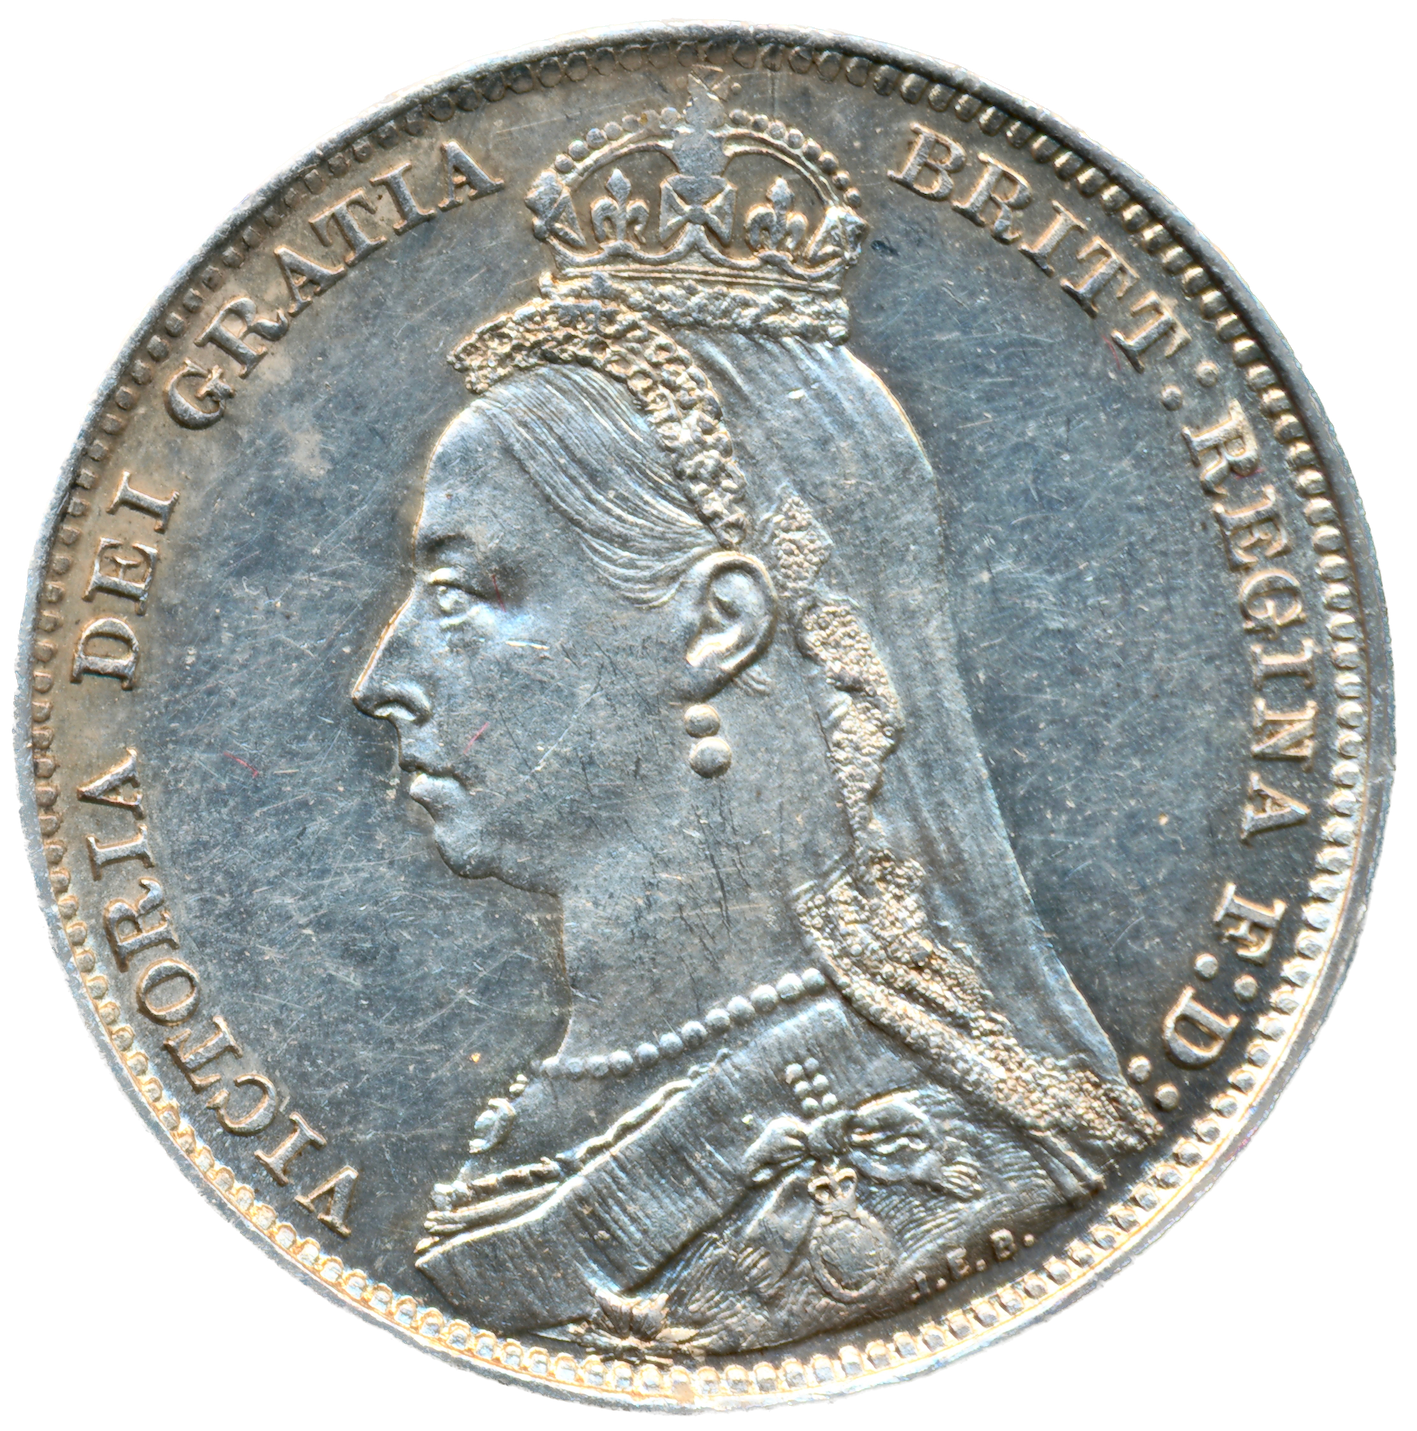 1892 Shilling Large Jubilee head S3927 ESC 3147 UNC